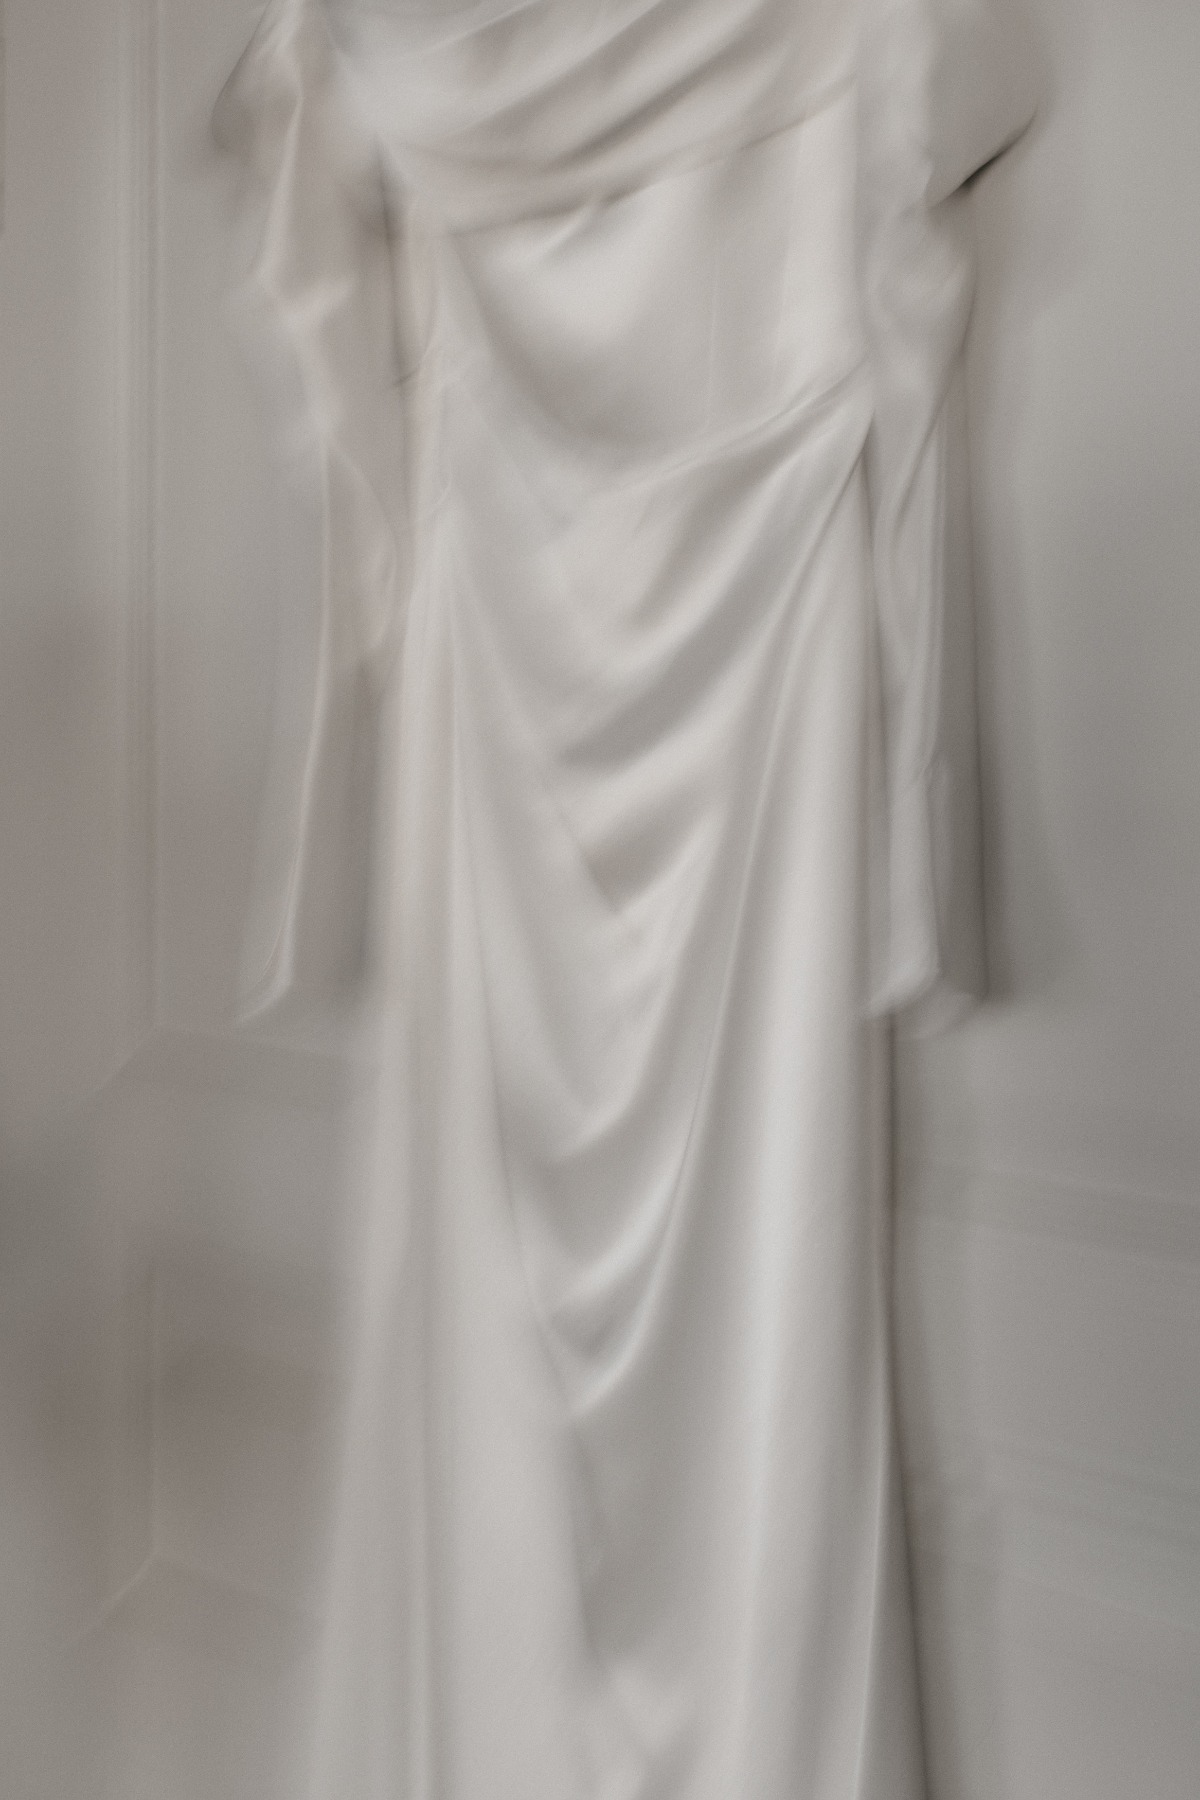 Silky designer wedding dress